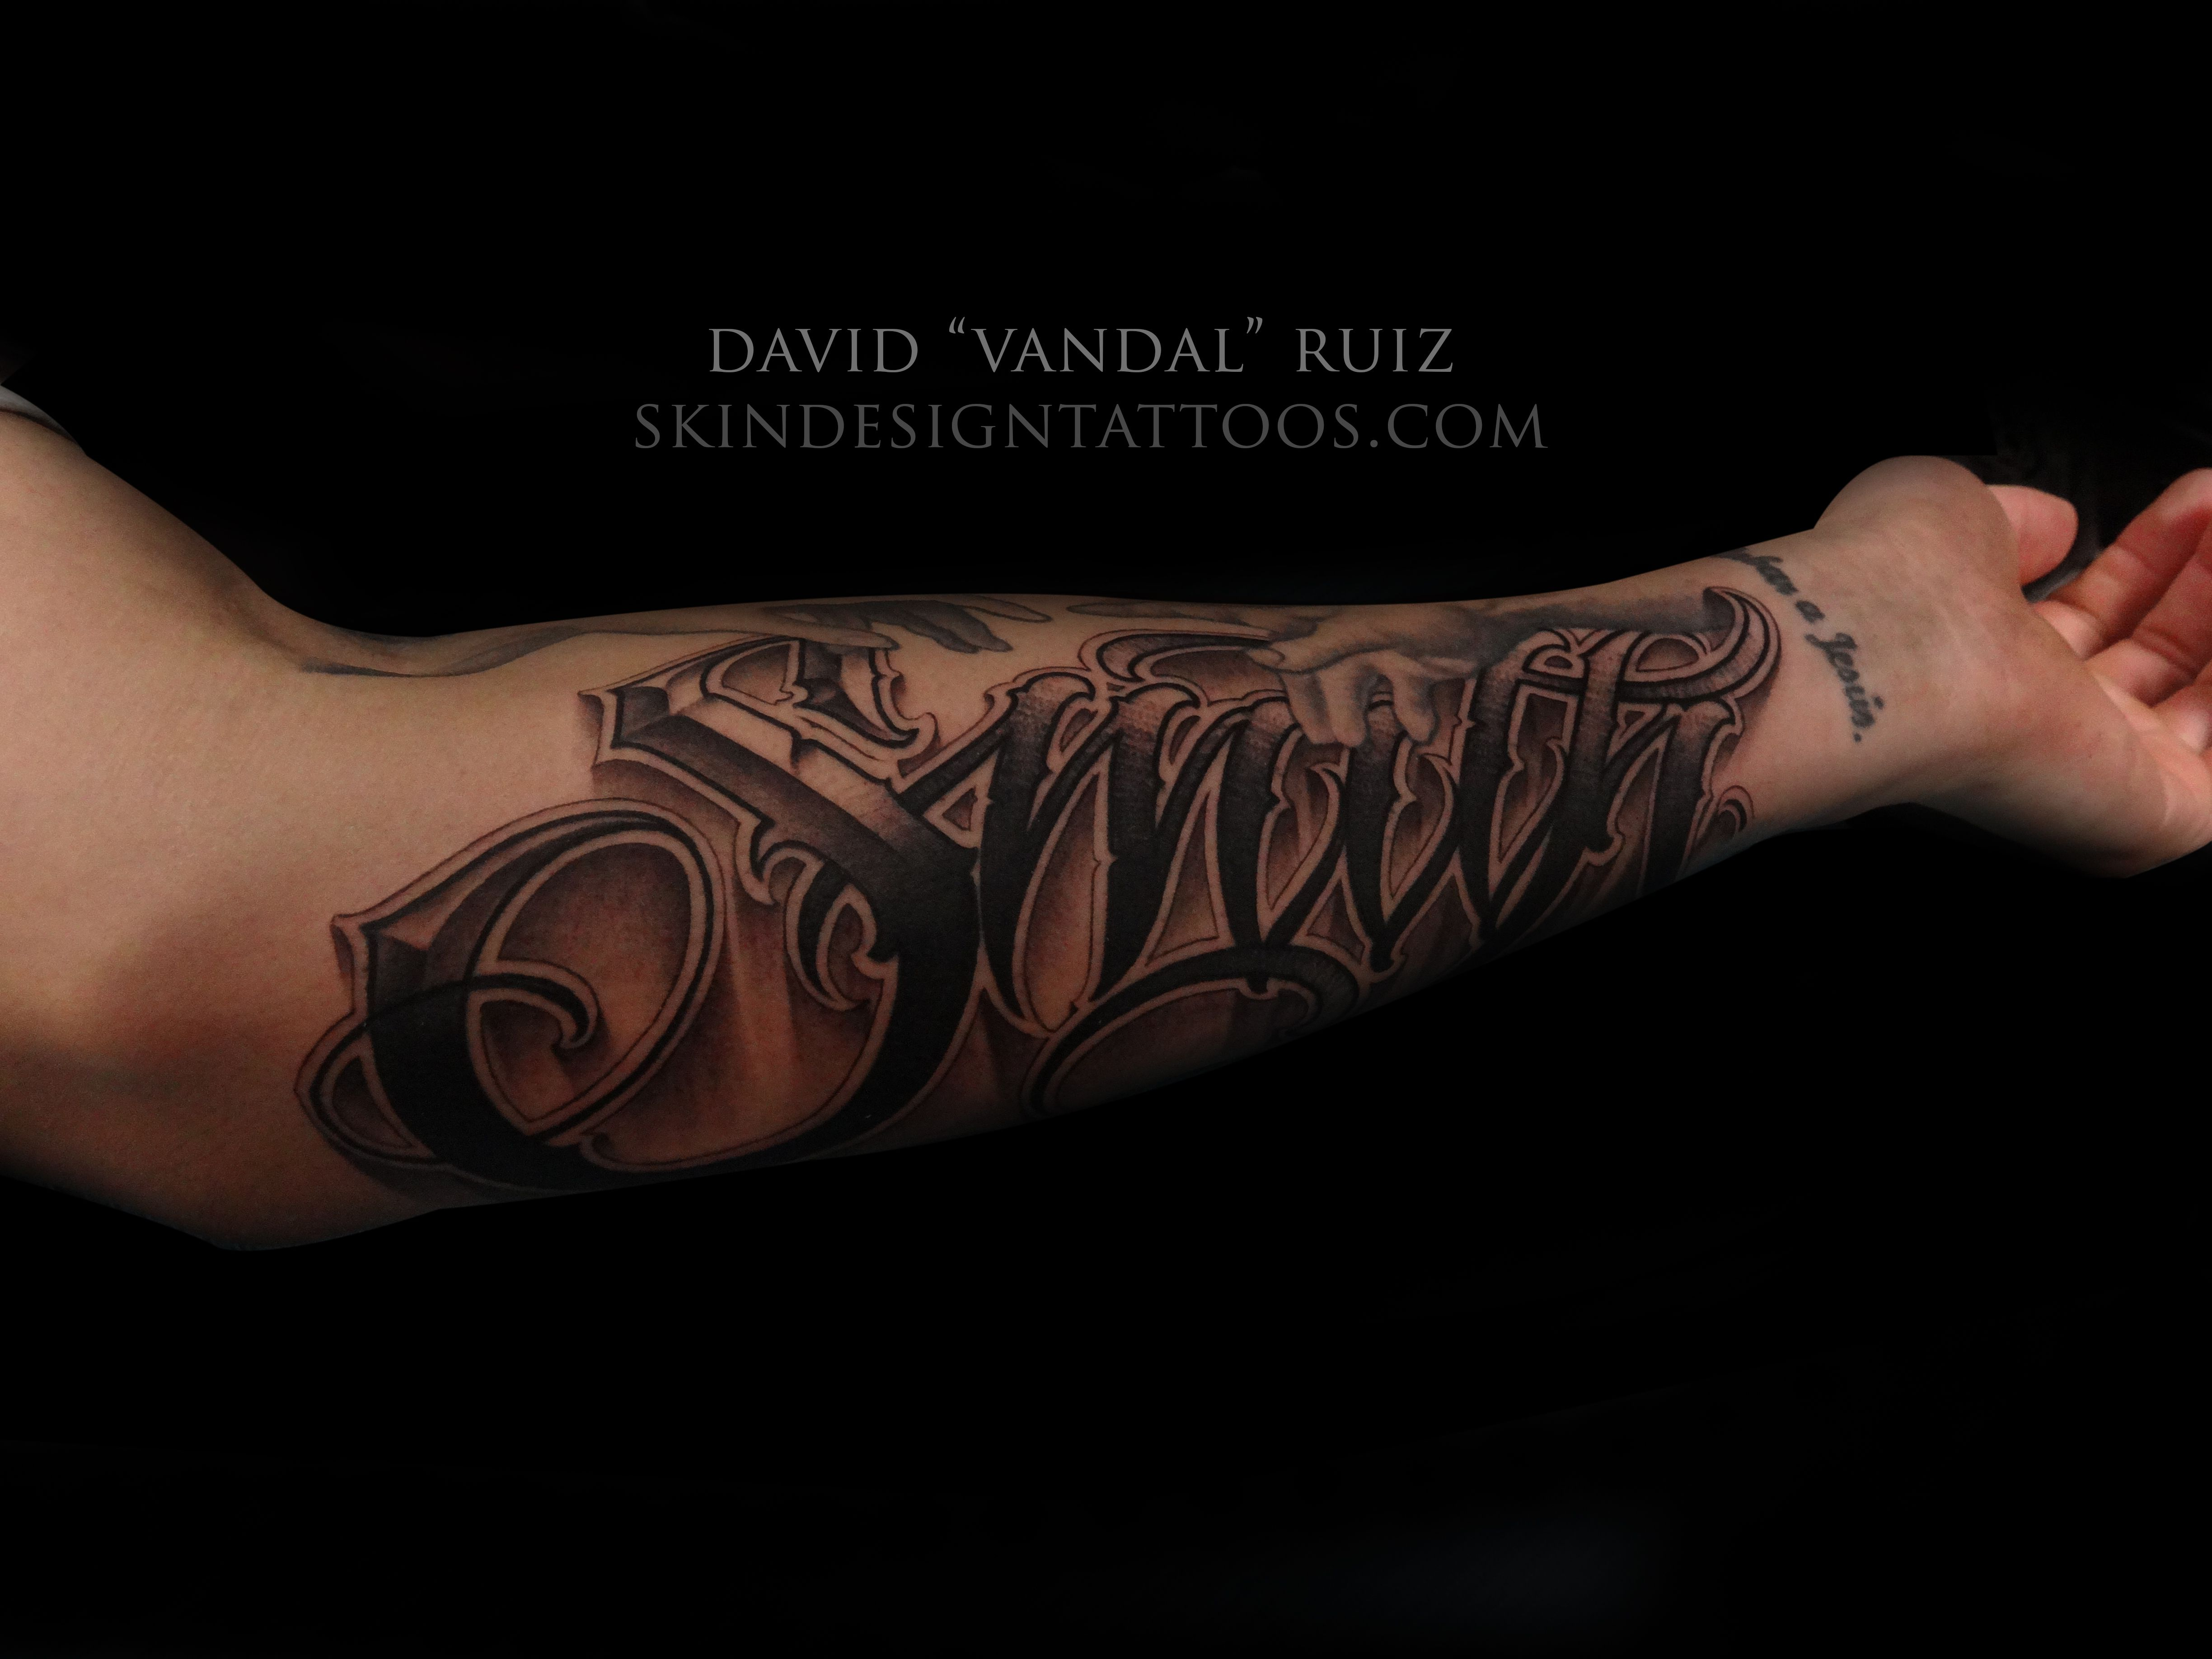 Name tattoo designs on arm for men 204321 - Mbaheblogjpq34i